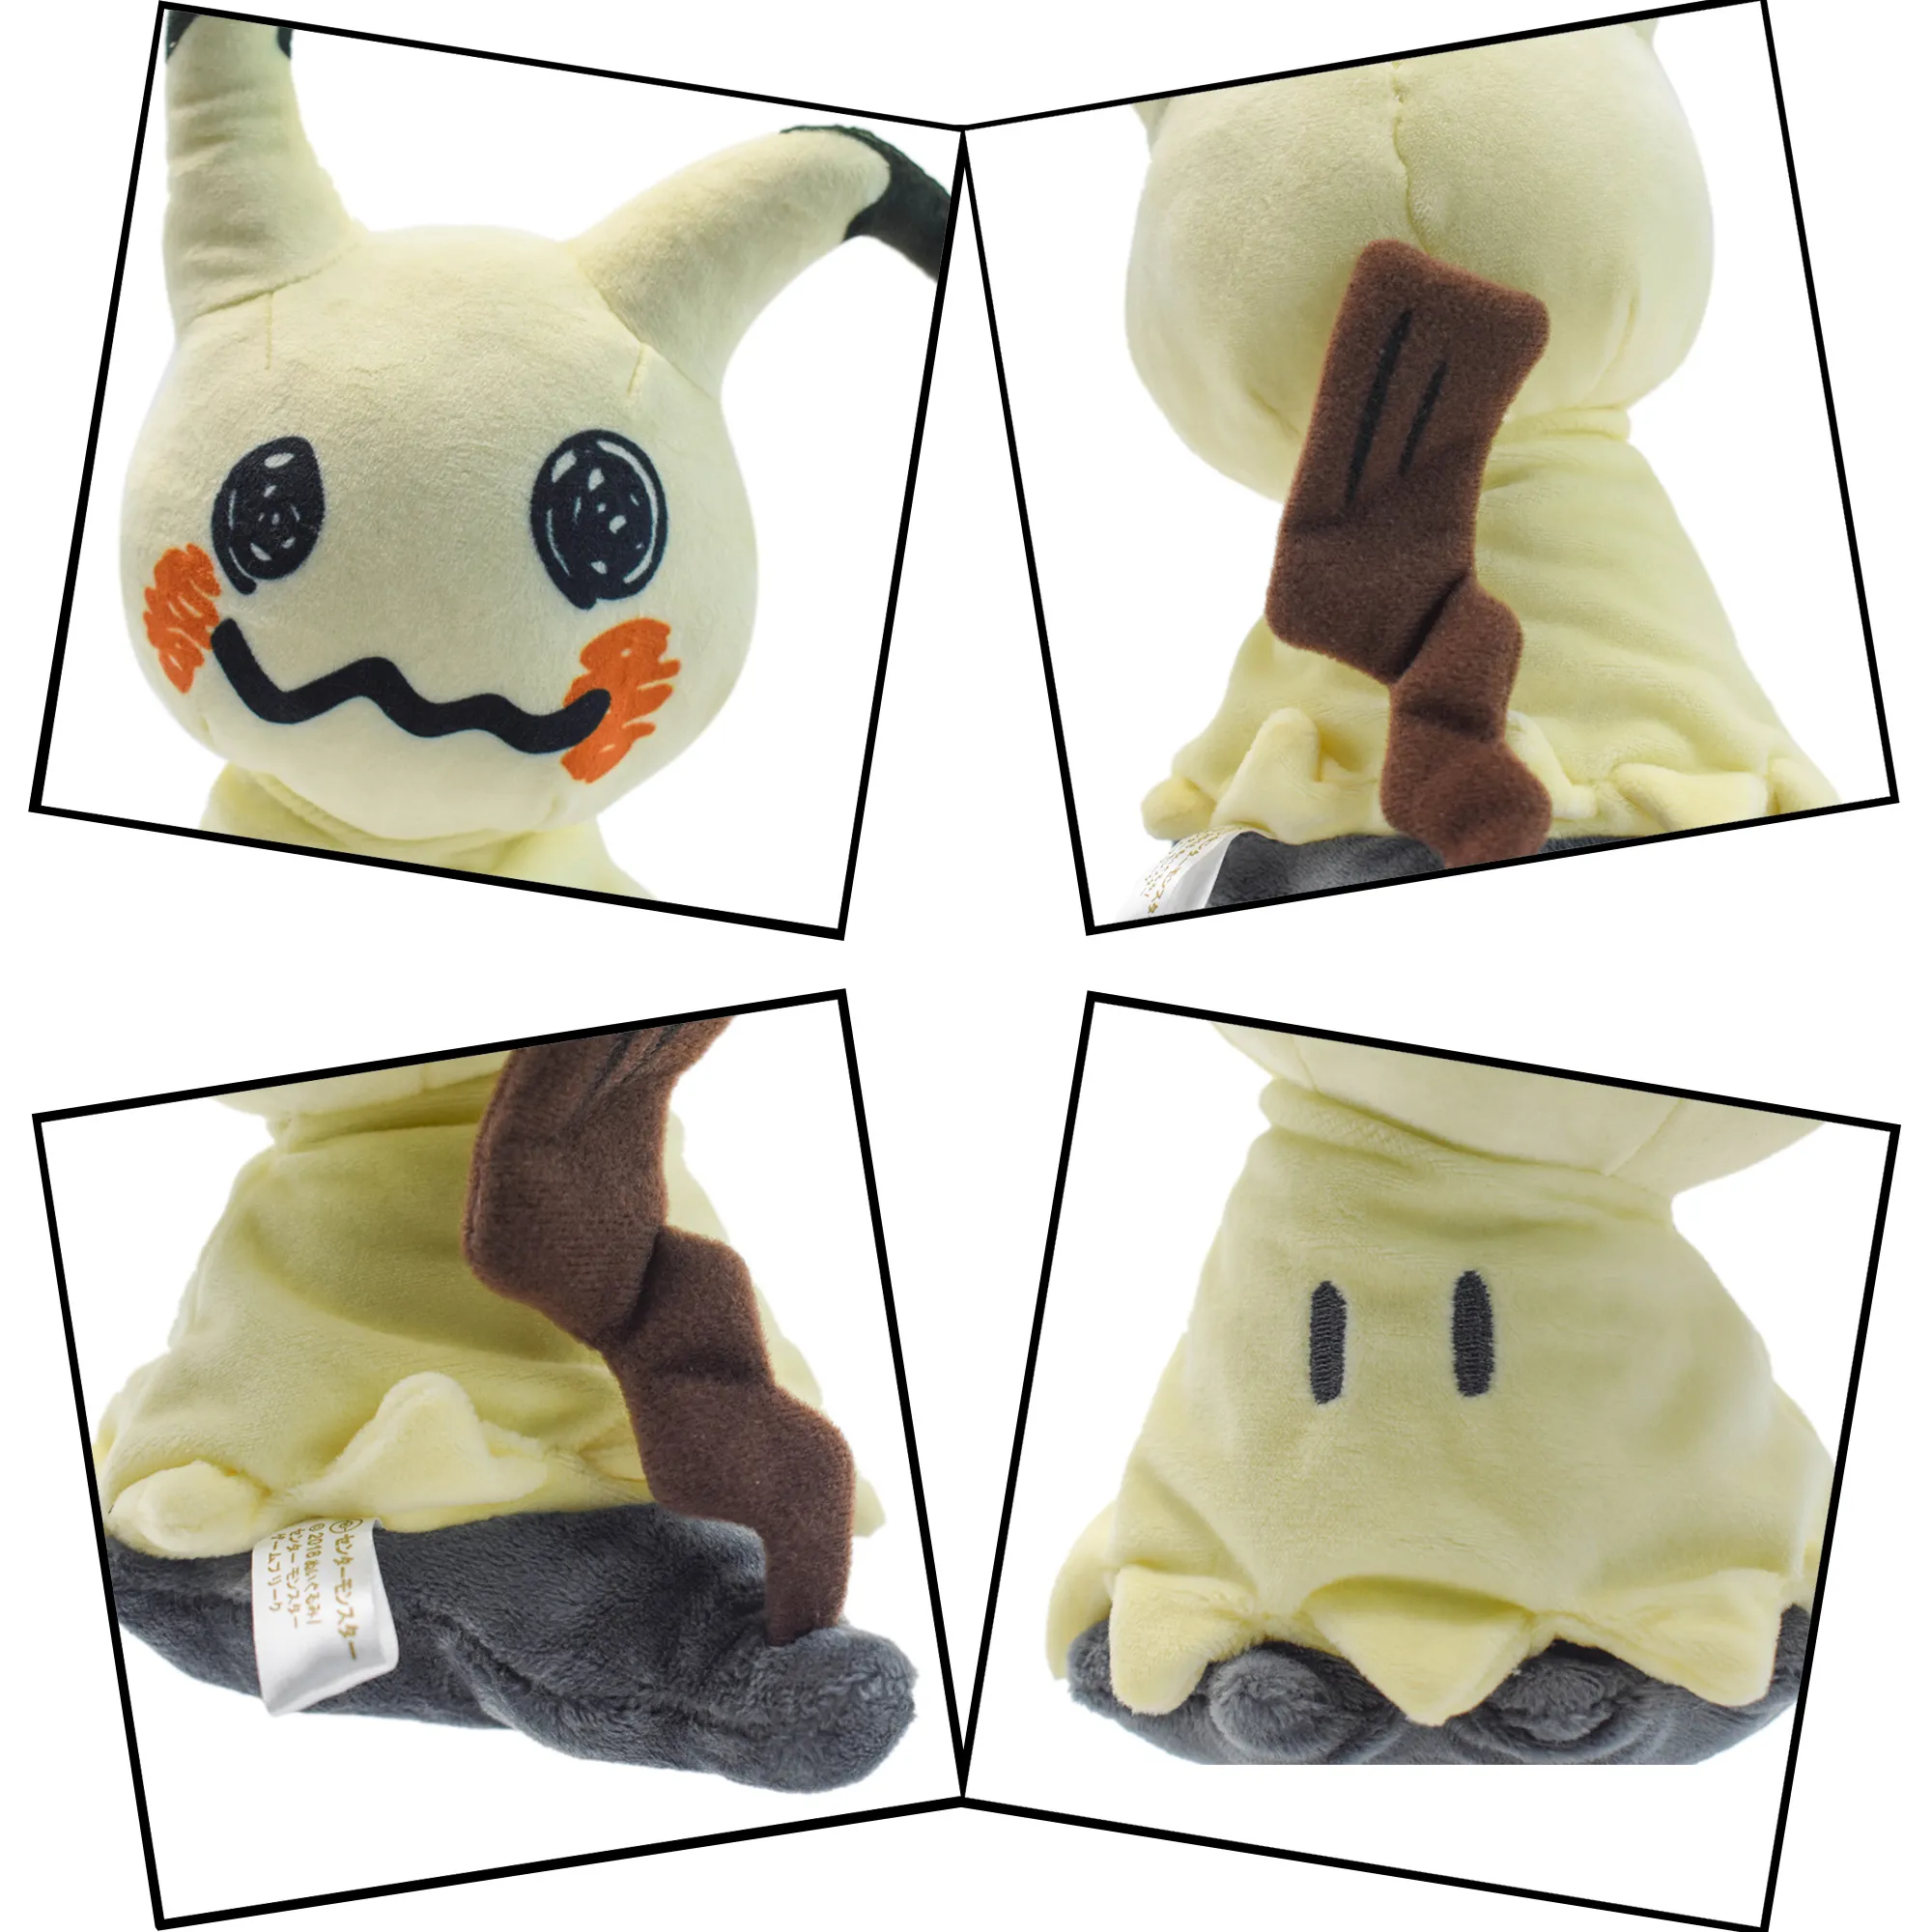 Mimikyu Pokemon Plush Doll Soft Animal Hot Toys Great Gift For Kids Free Shipping 23CM 4 - Mimikyu Plush